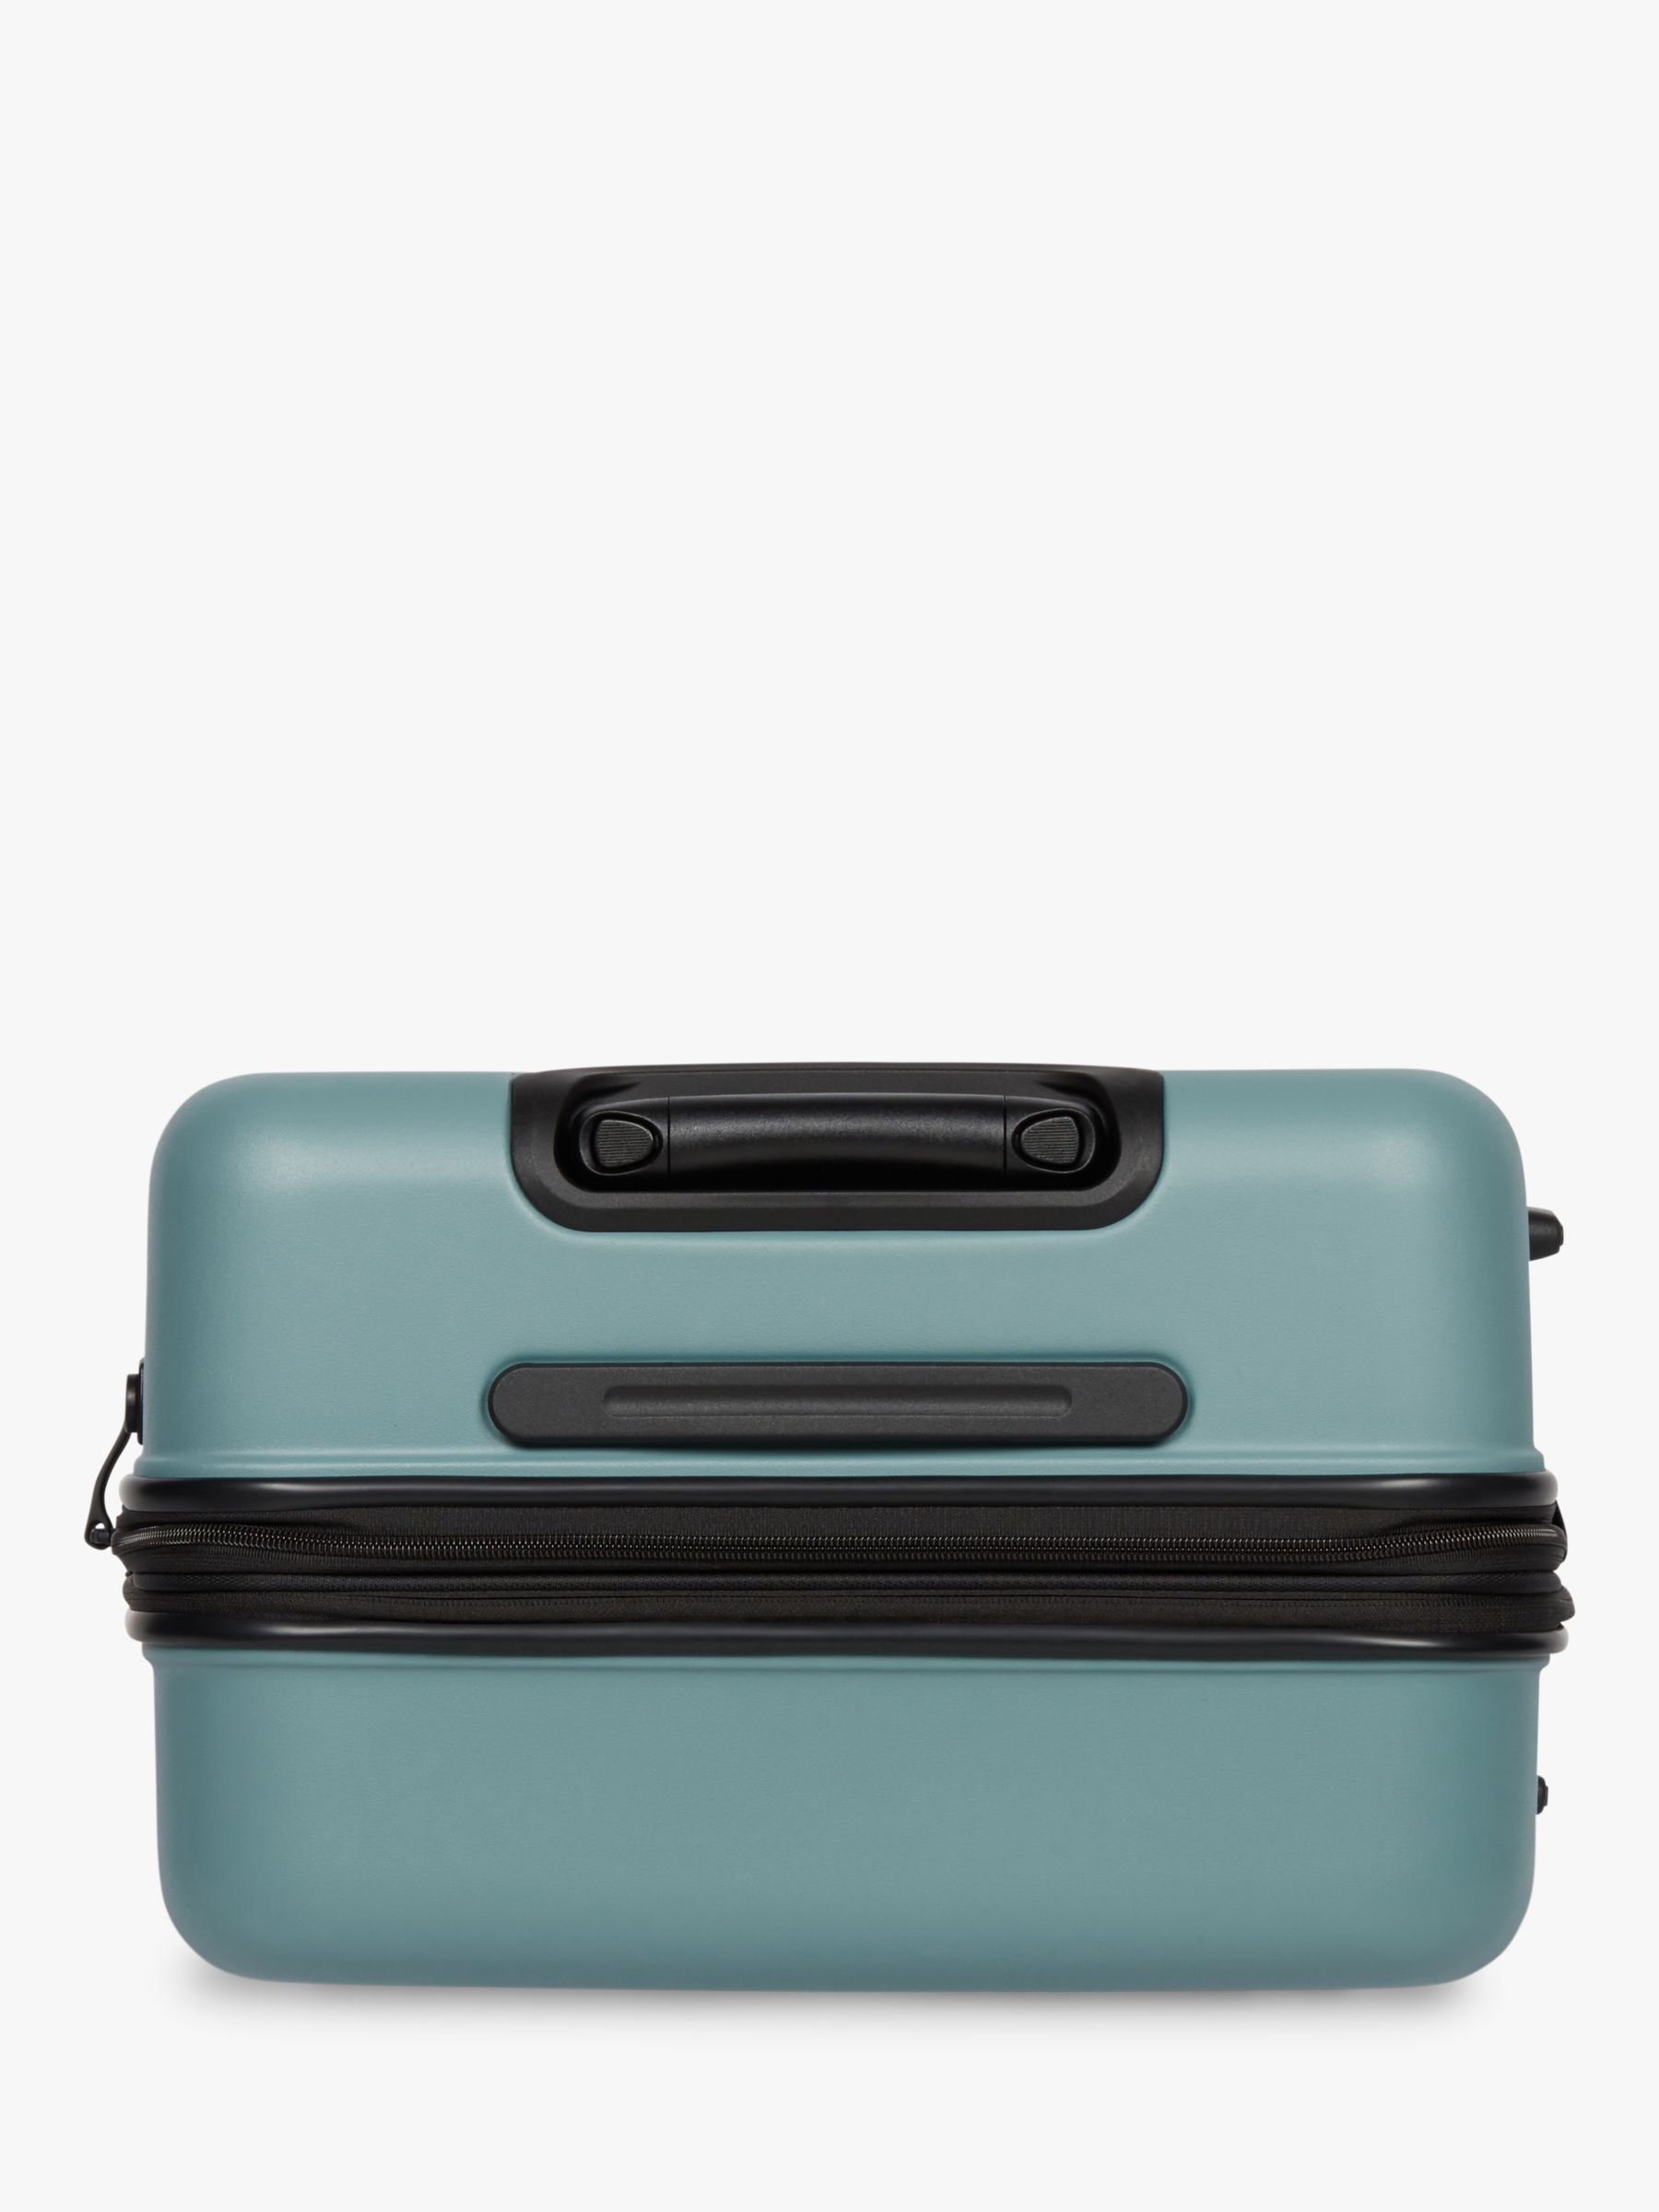 Antler Clifton 4-Wheel 68cm Medium Expandable Suitcase, Mineral